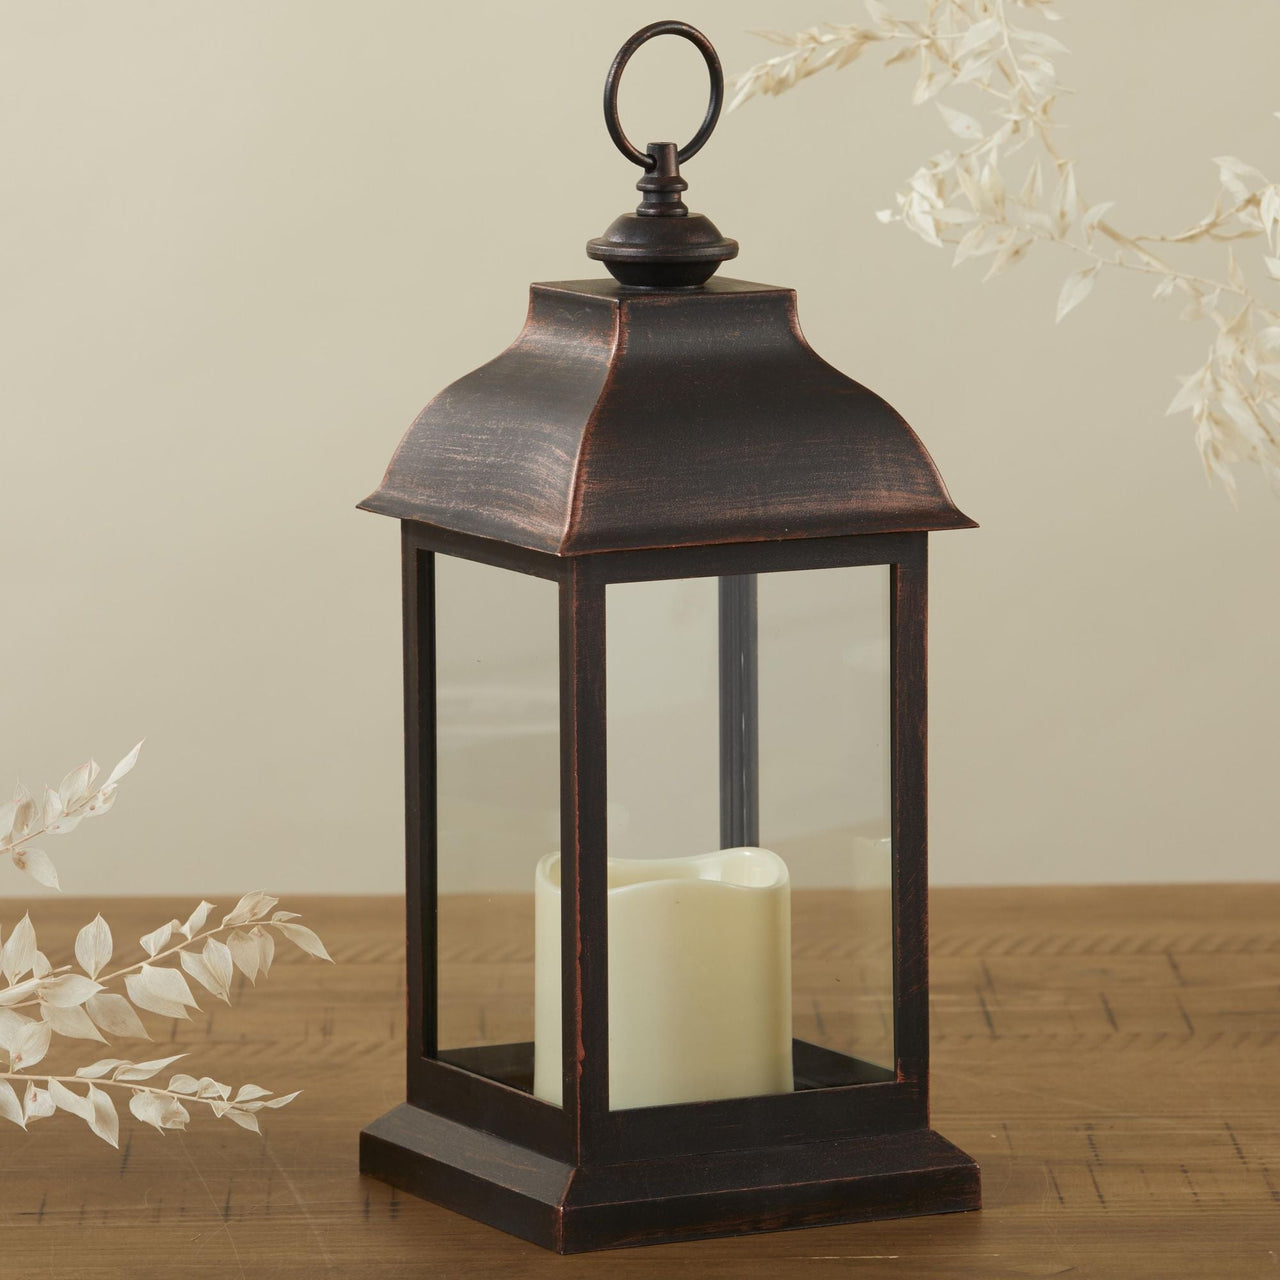 Led Vintage Lantern Flickering Flame, Decorations Indoor/outdoor